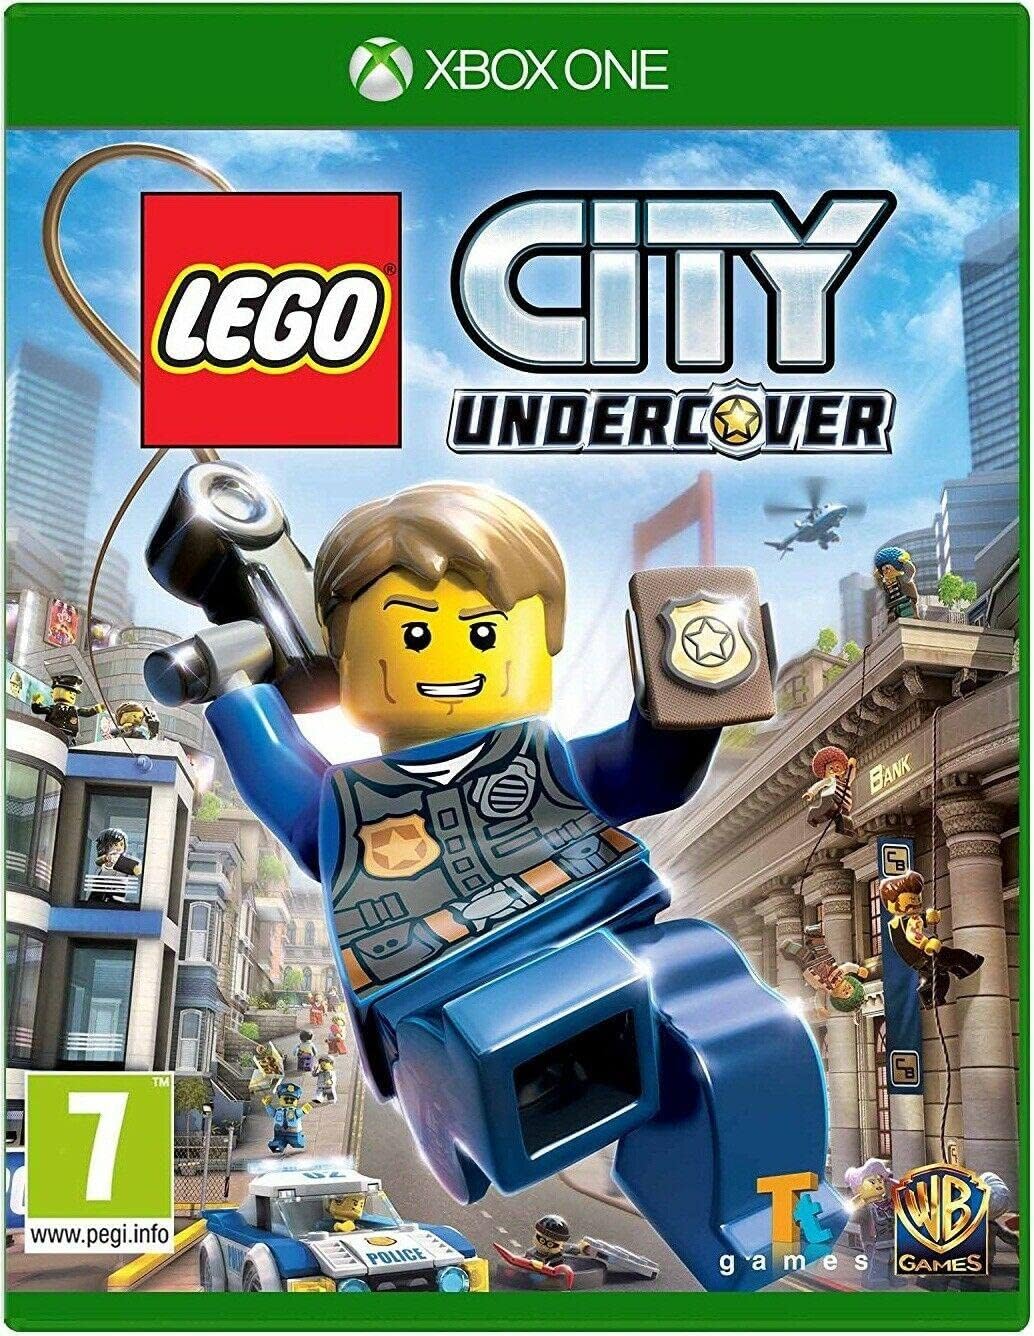 Xbox One Game - LEGO City Undercover - PEGI 7